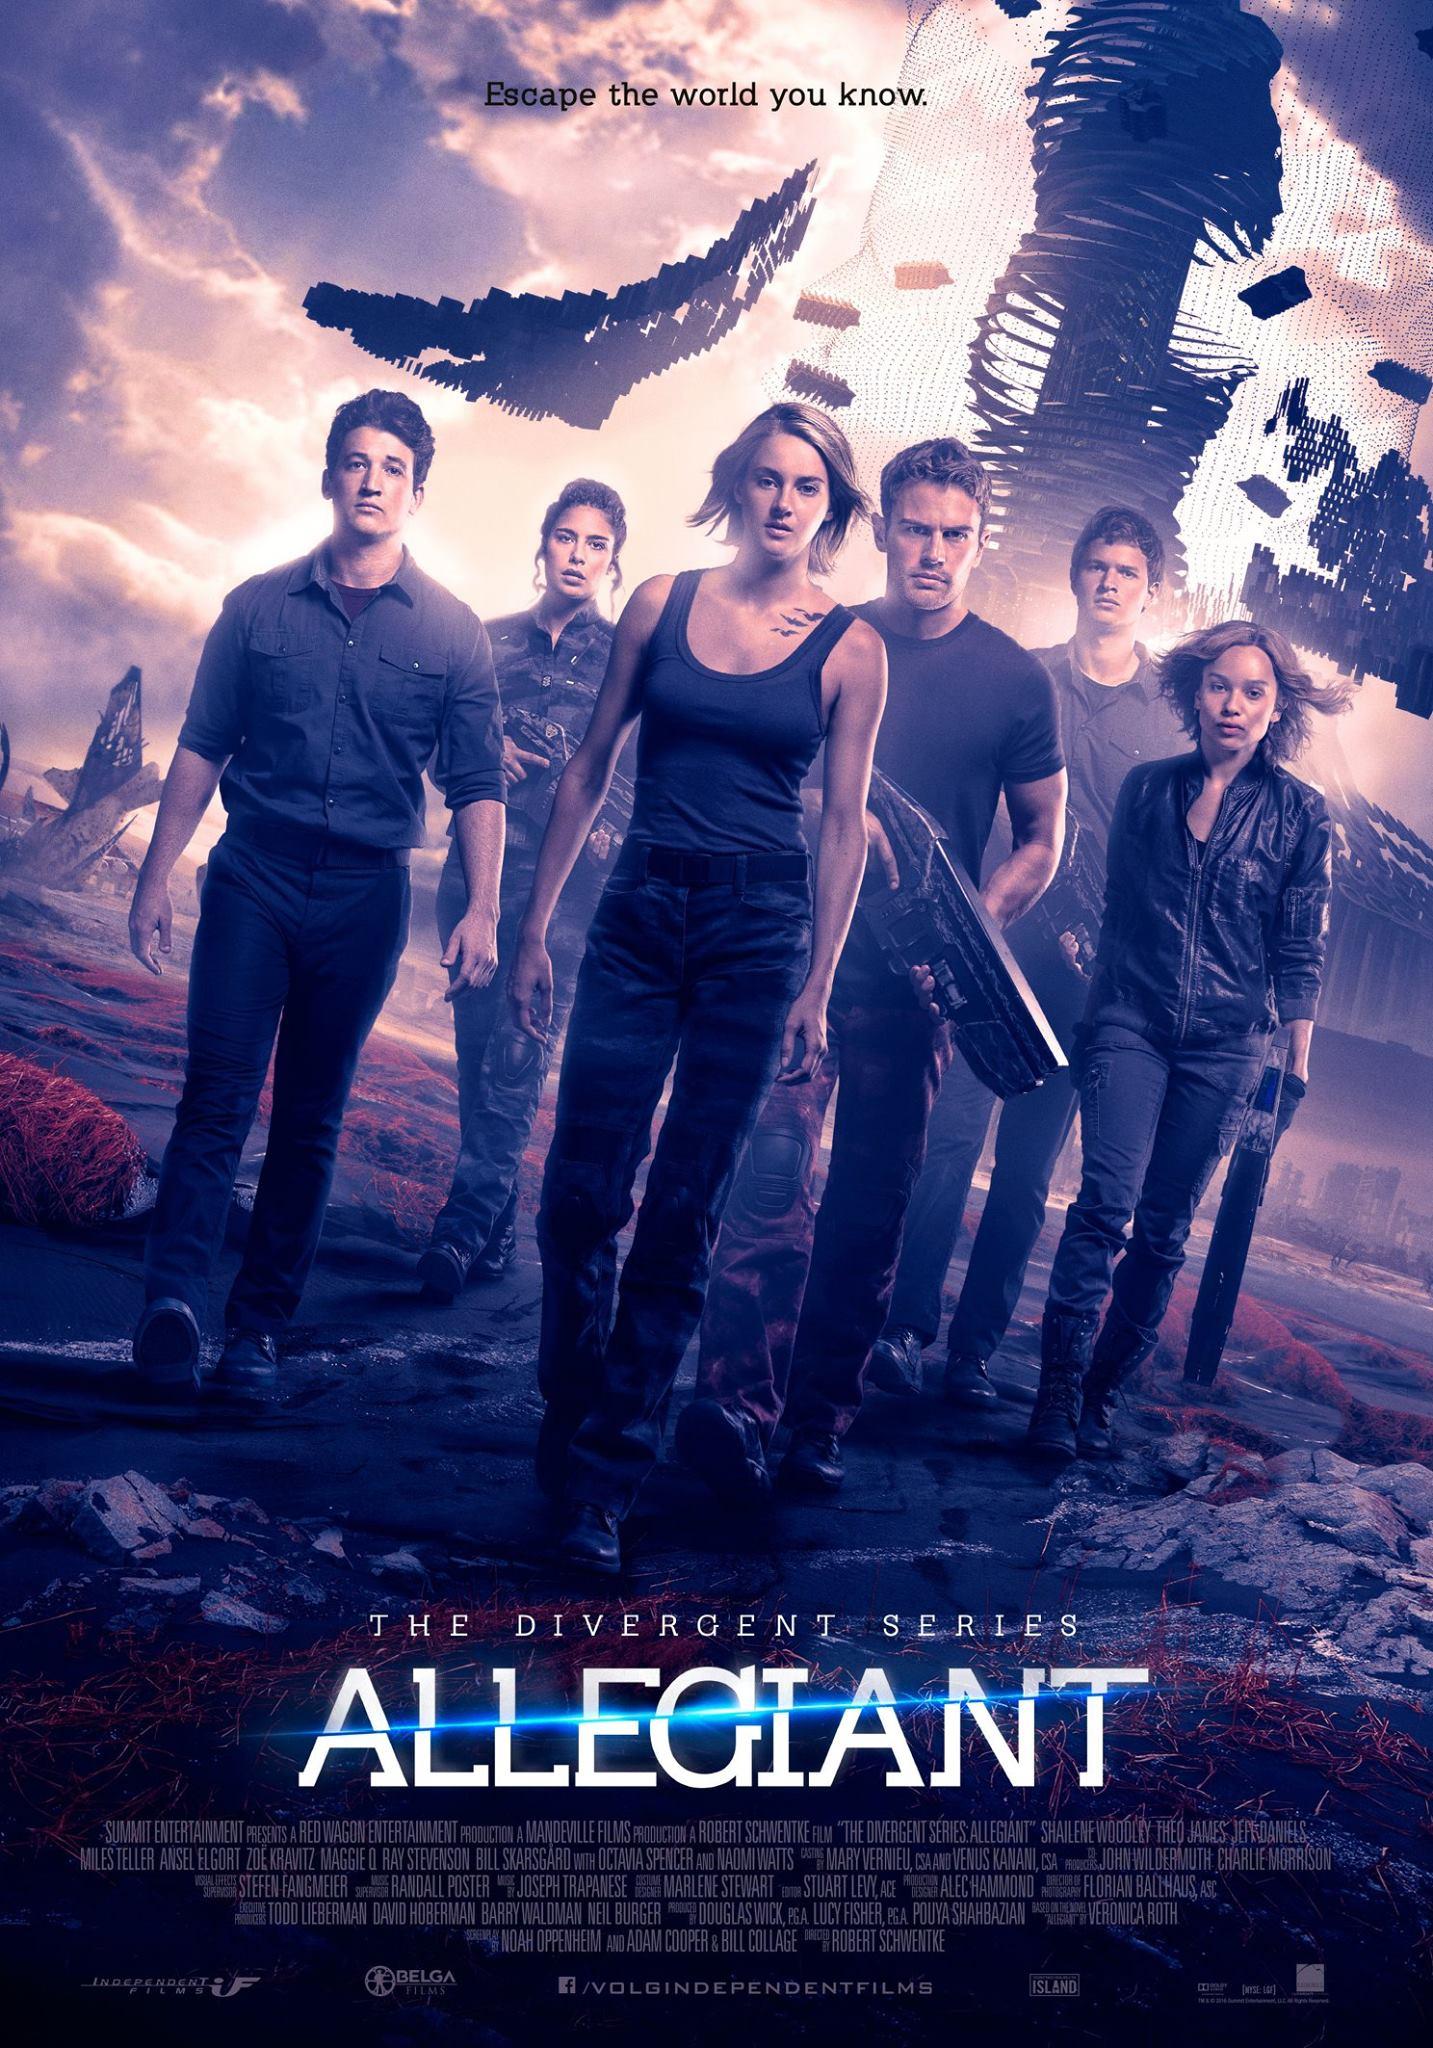 Постер фильма Дивергент, глава 3: За стеной | Divergent Series: Allegiant